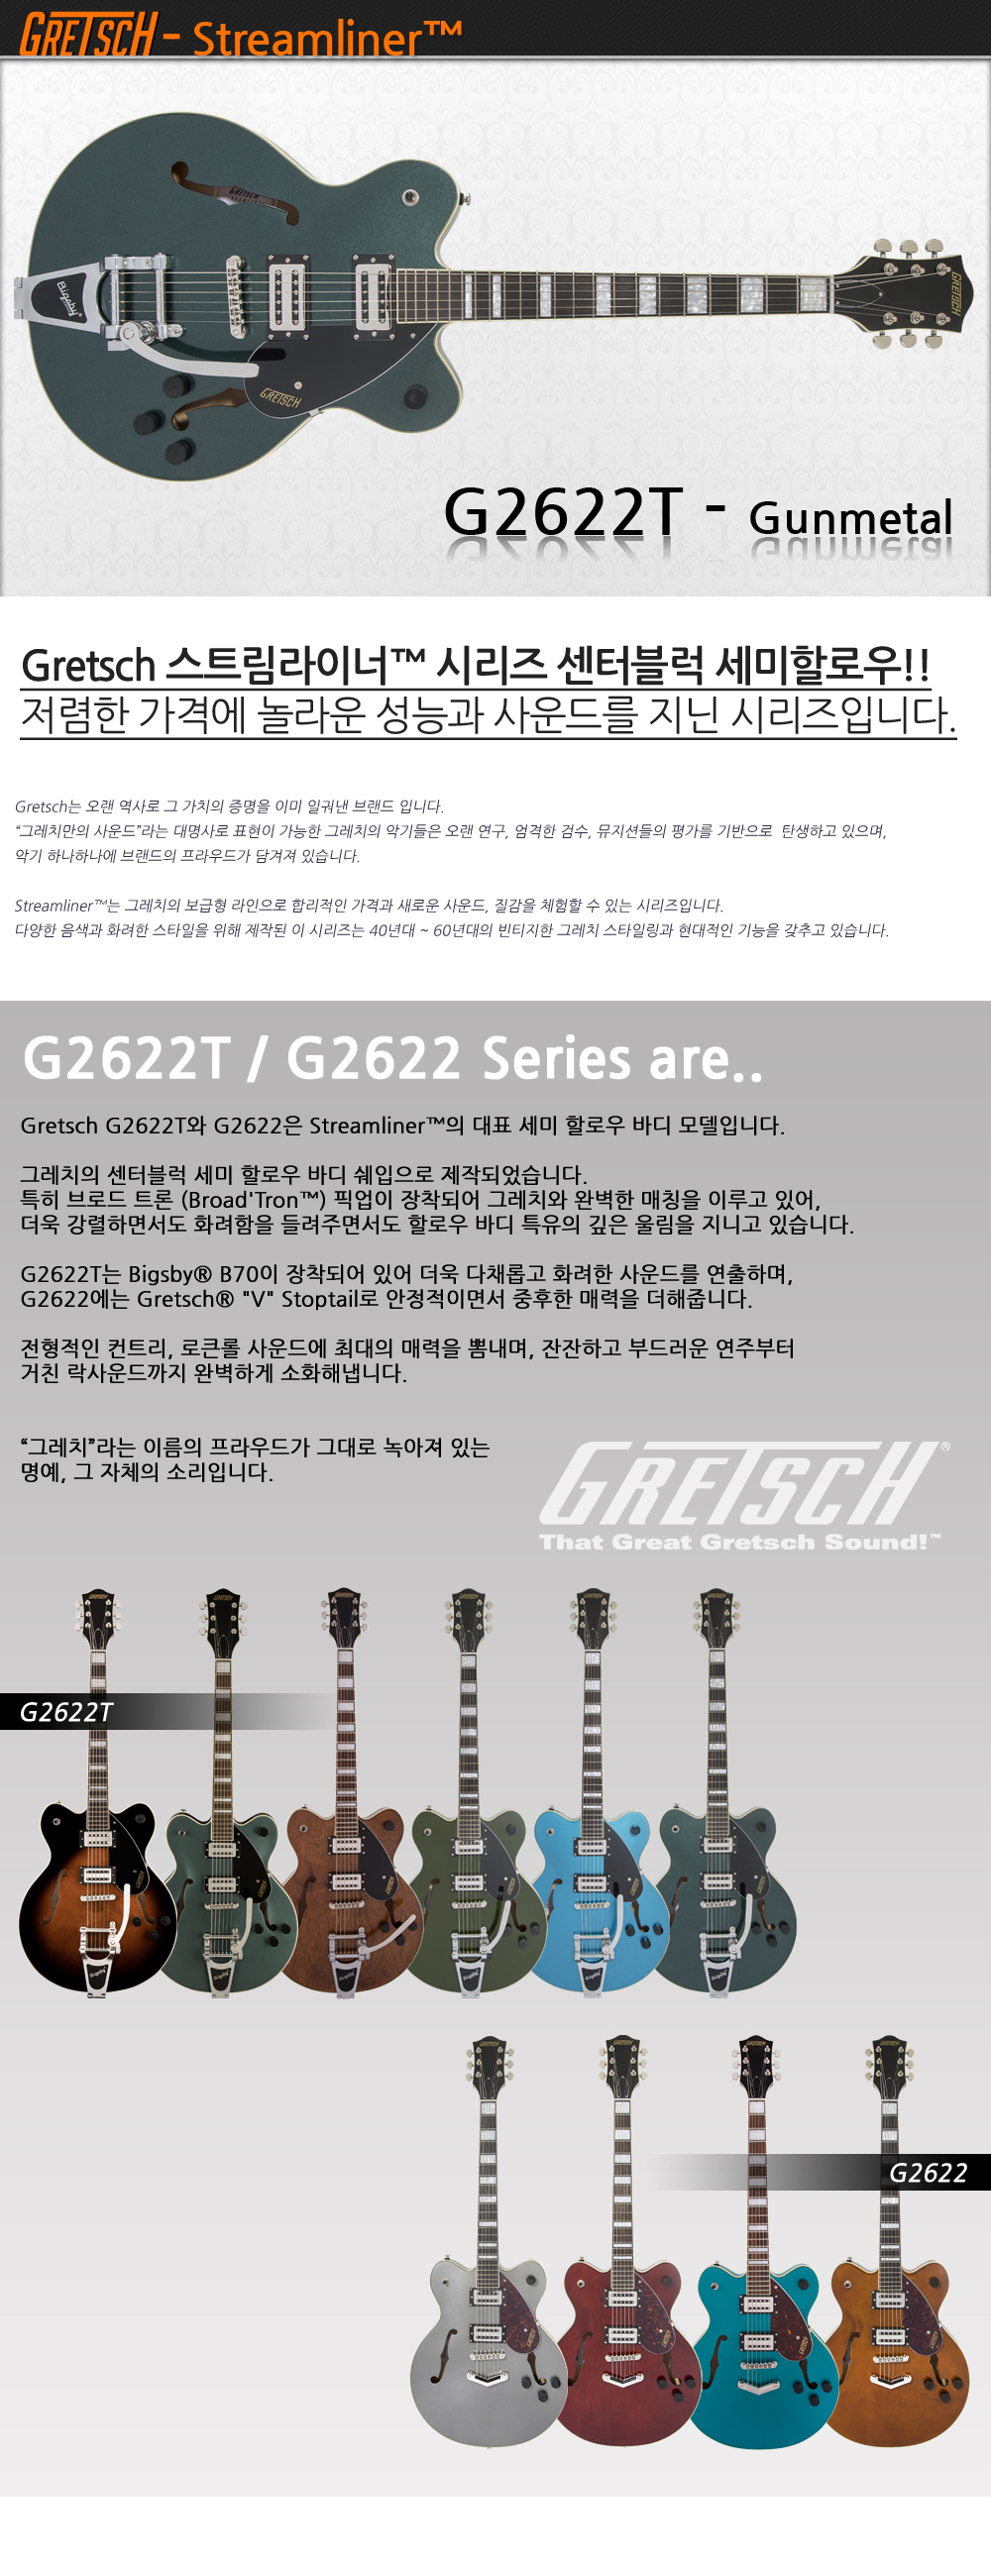 Gretsch-G2622T-Gunmetal_1_153206.jpg